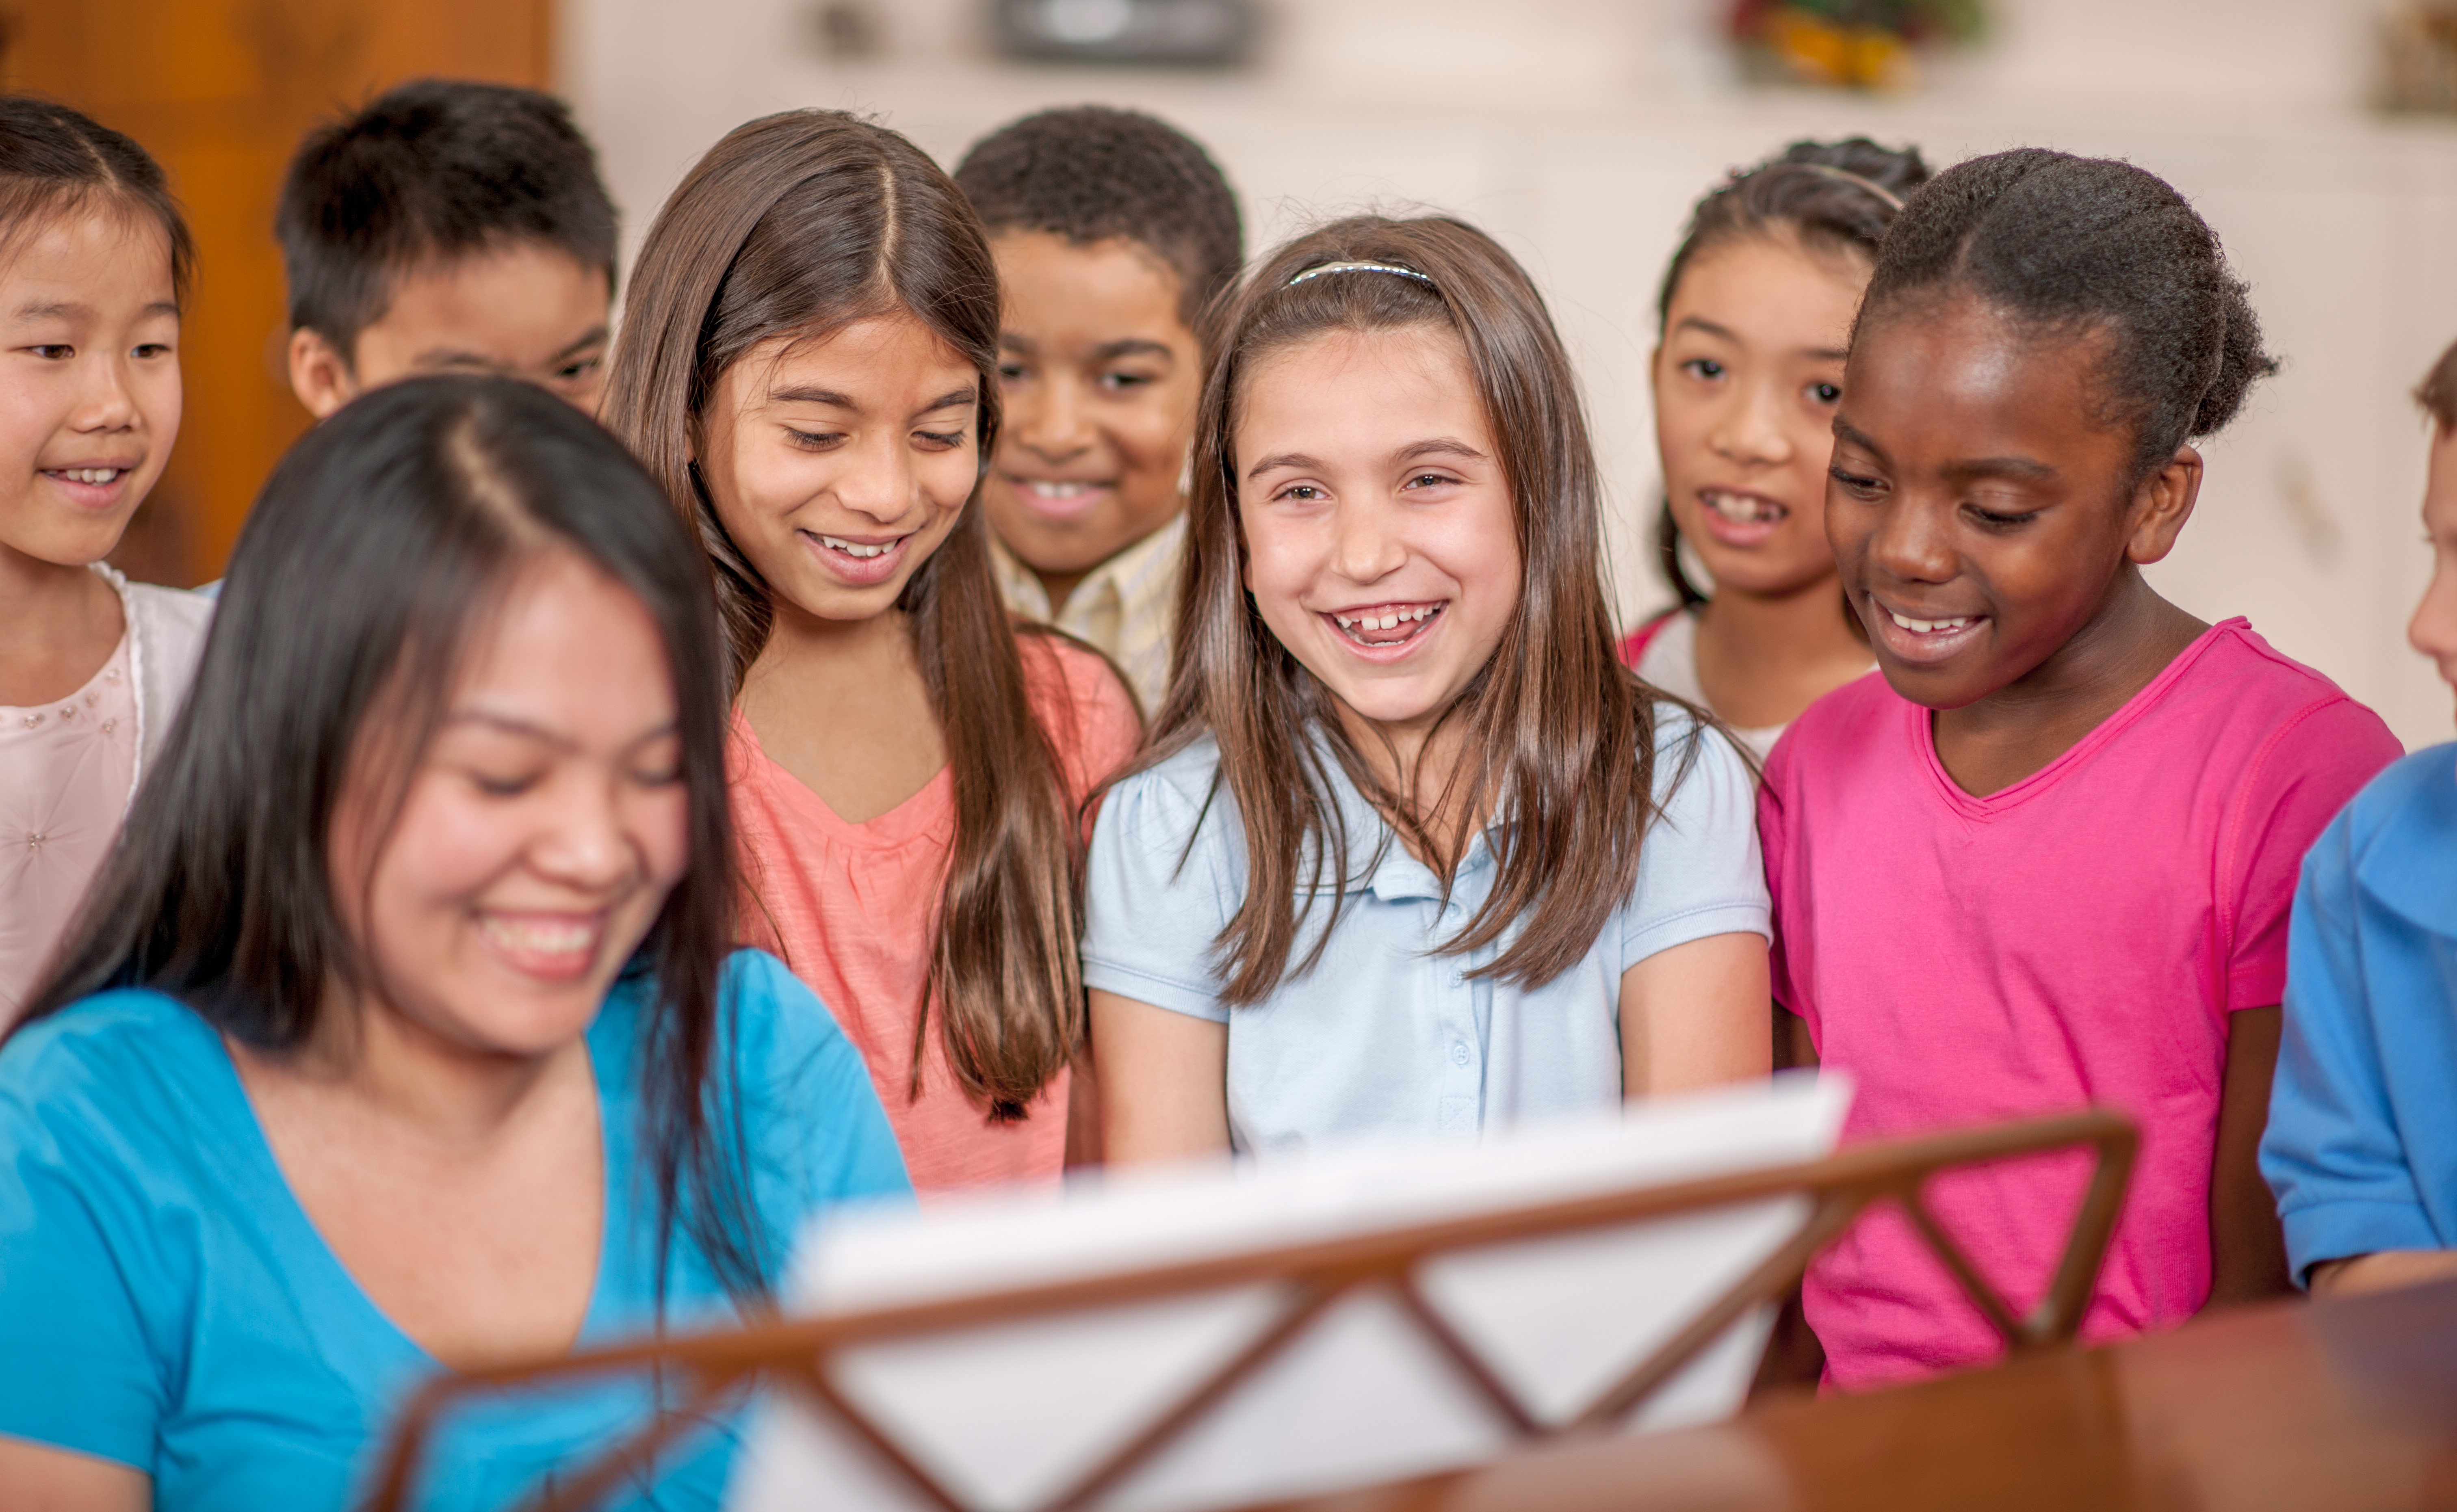 Music Teaching in a Classroom Environment